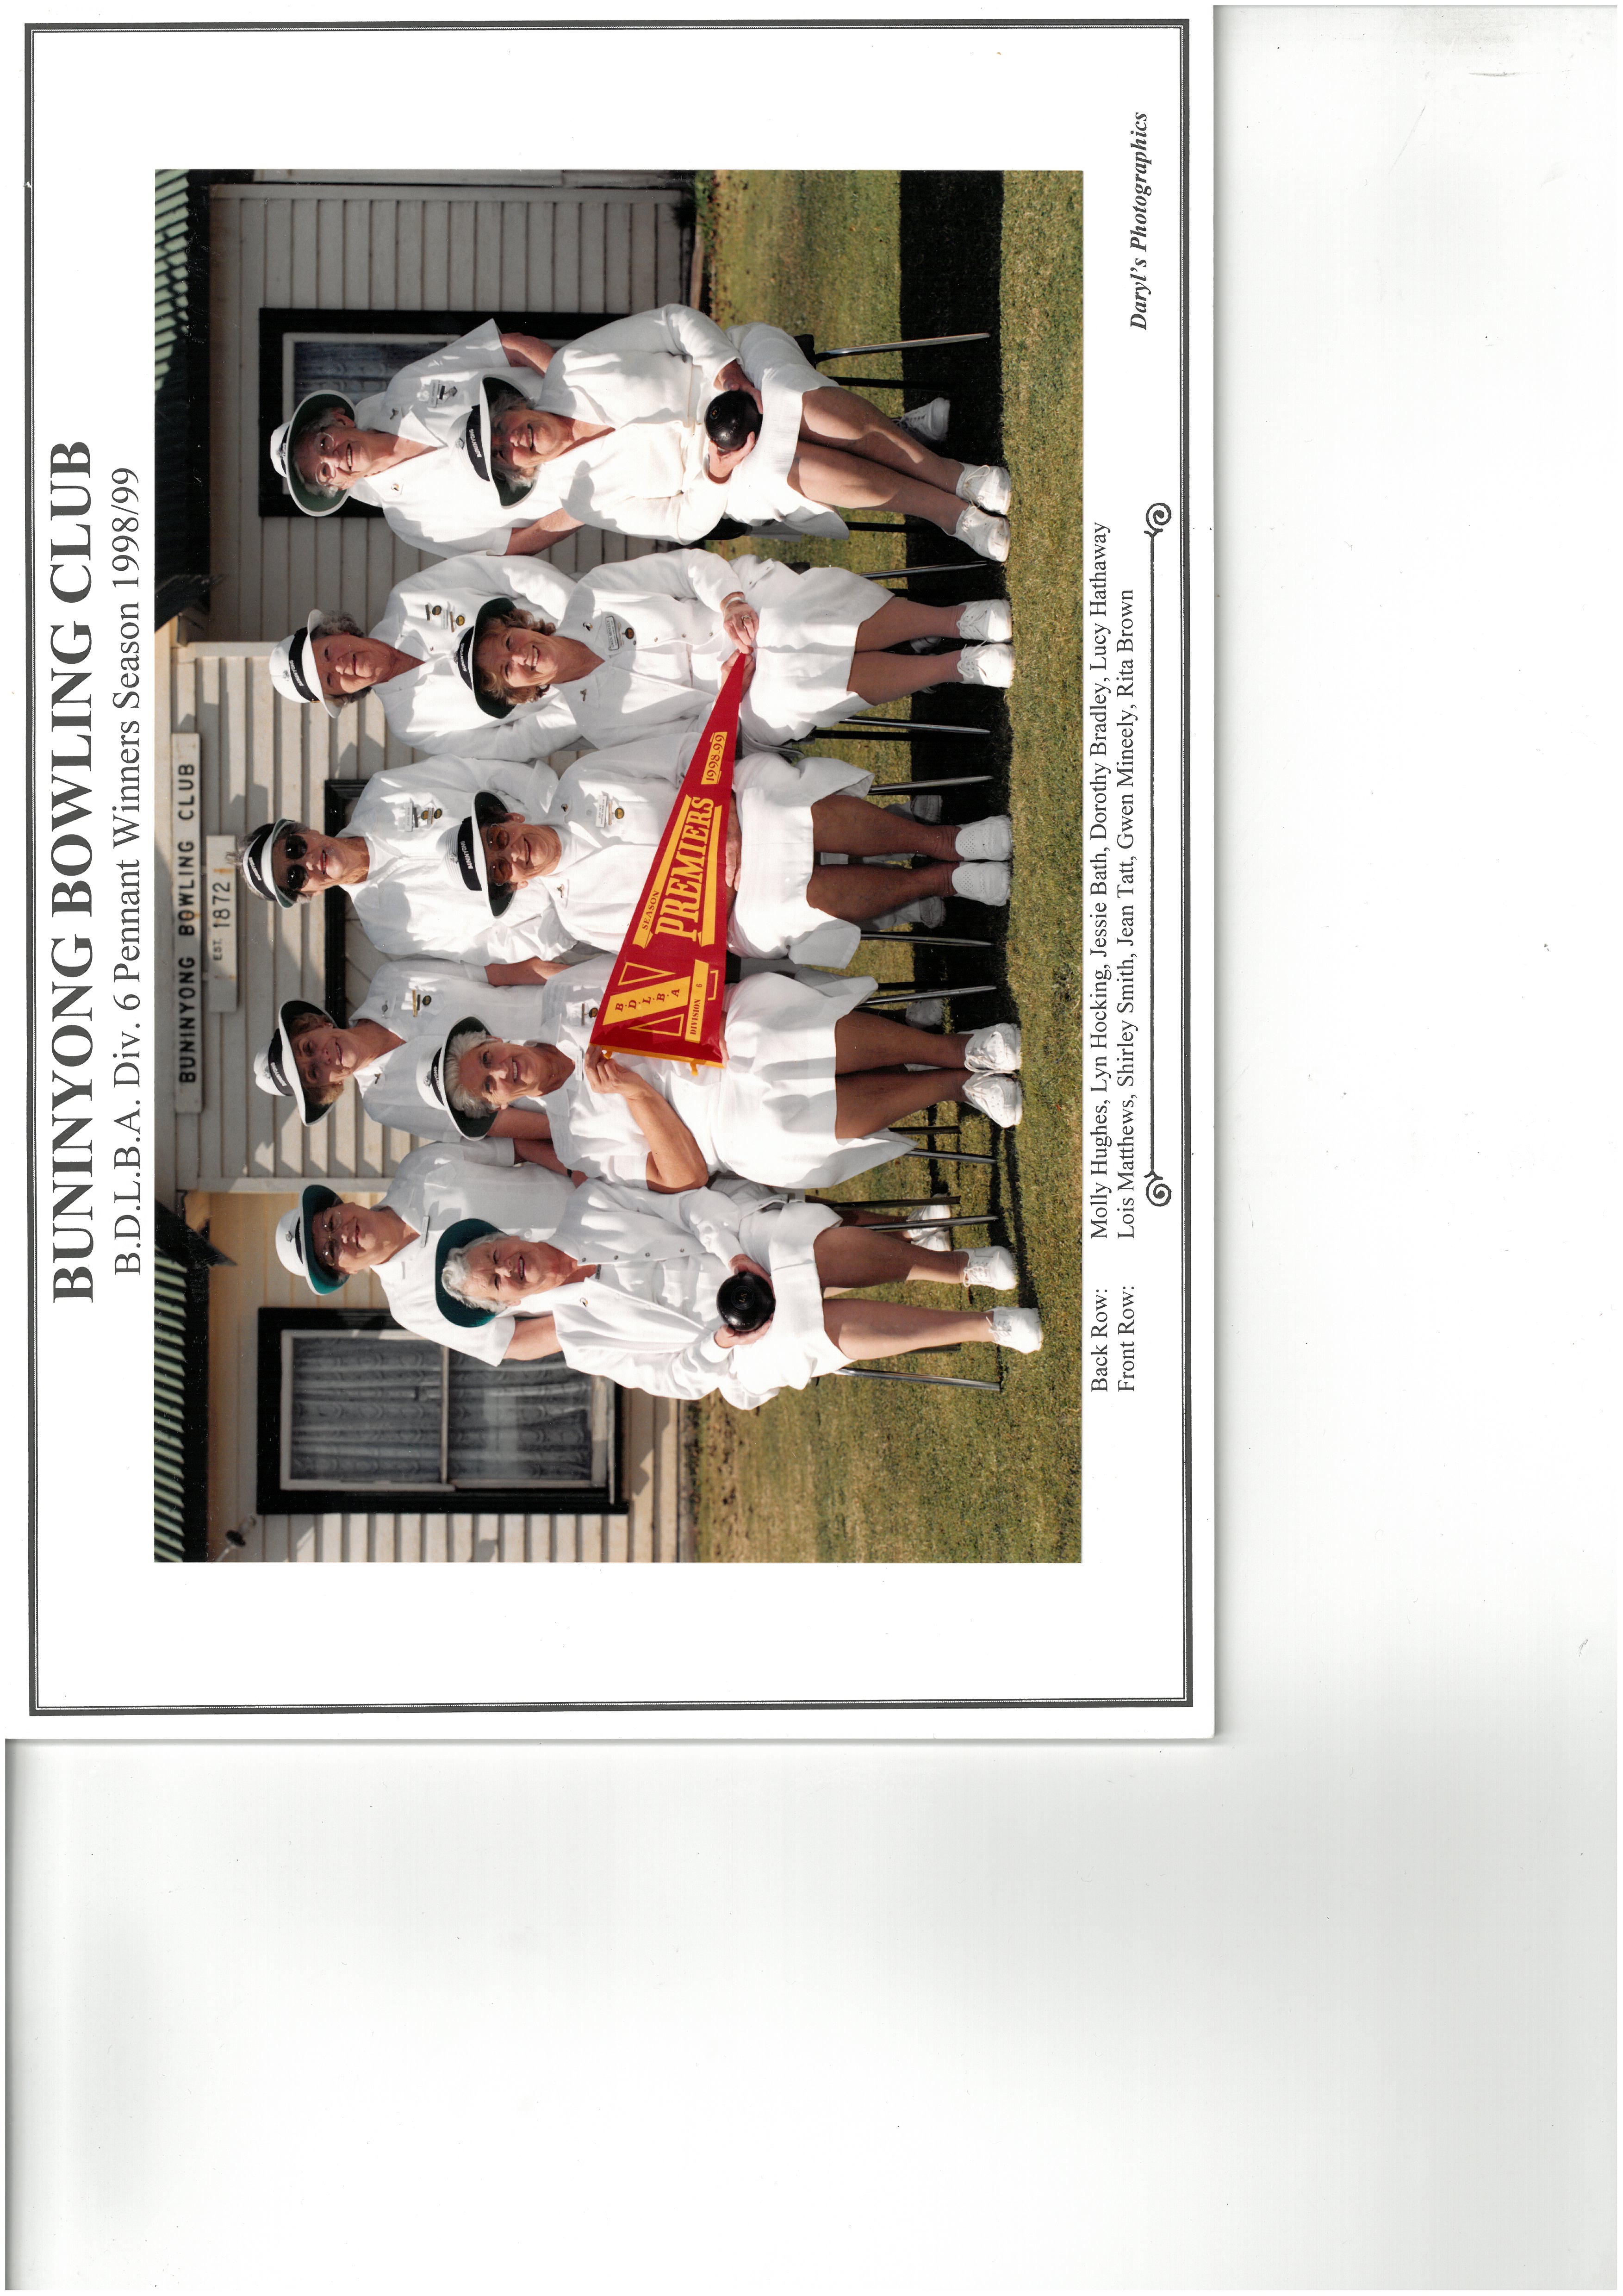 BDLBA Division 6 Premiership Team 1998-99